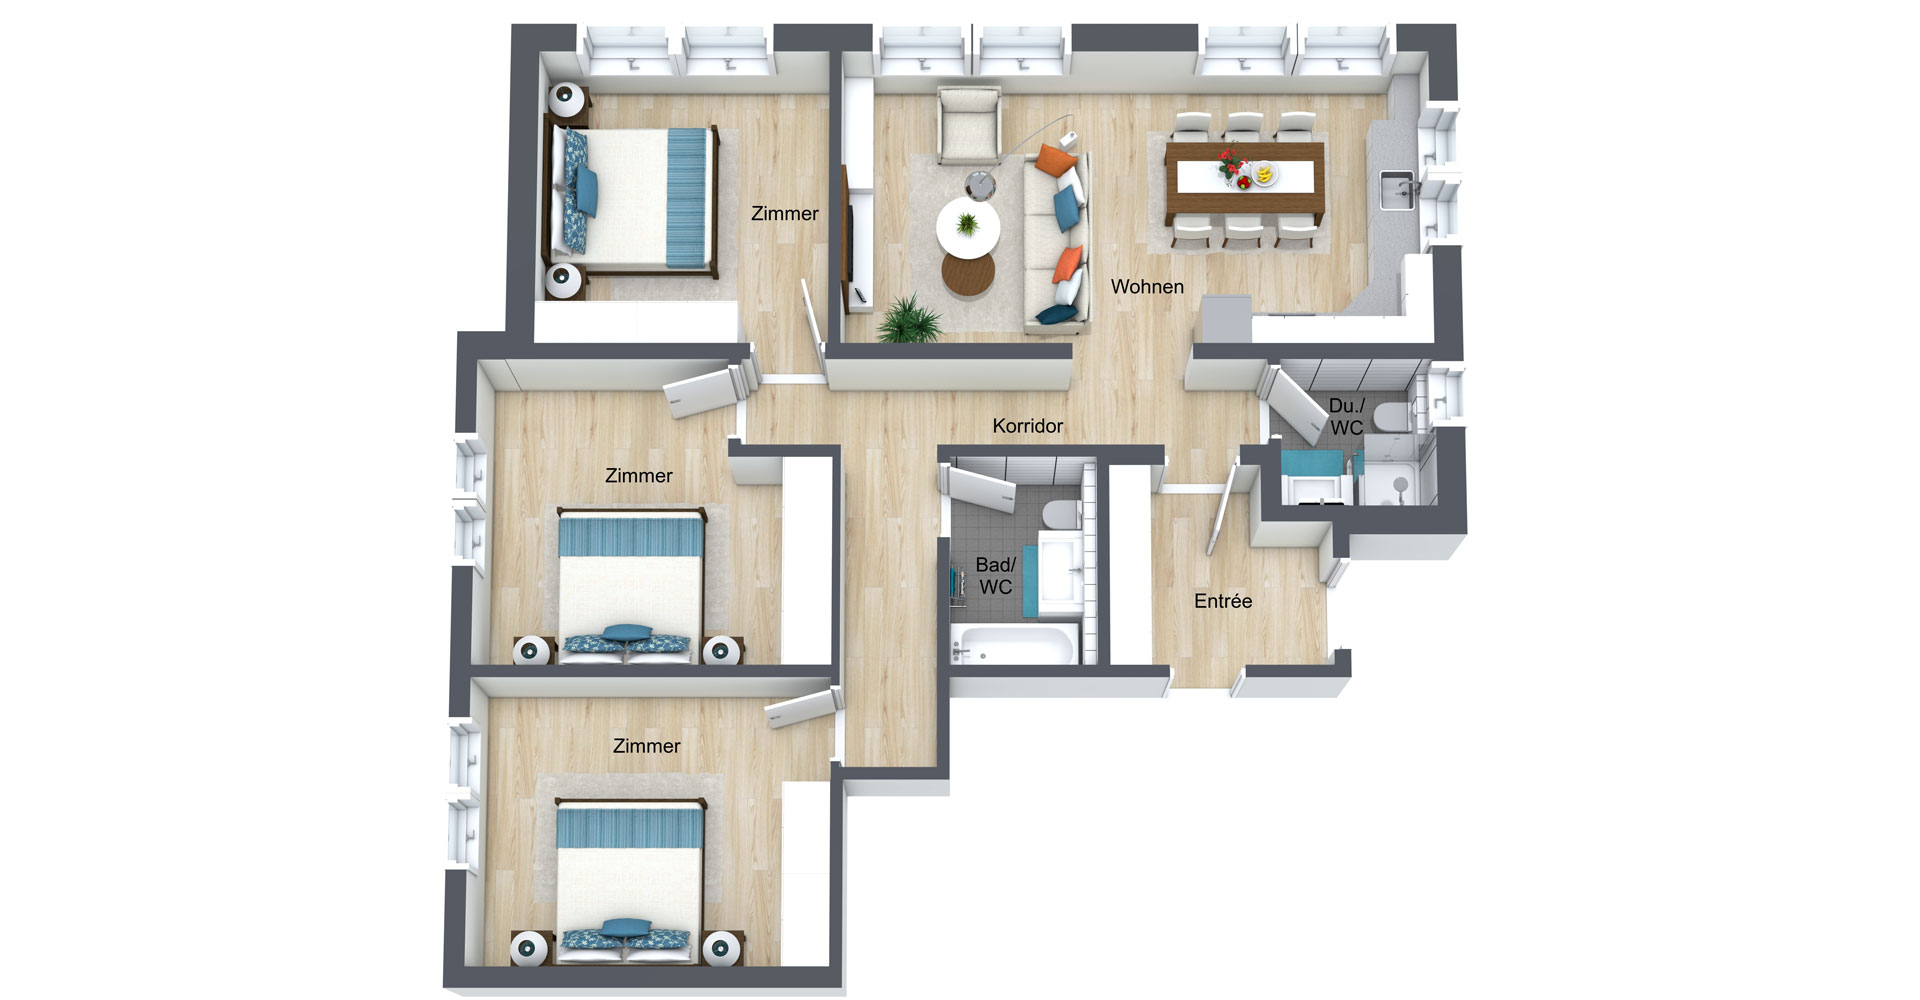 Rent modern holiday apartment zermatt